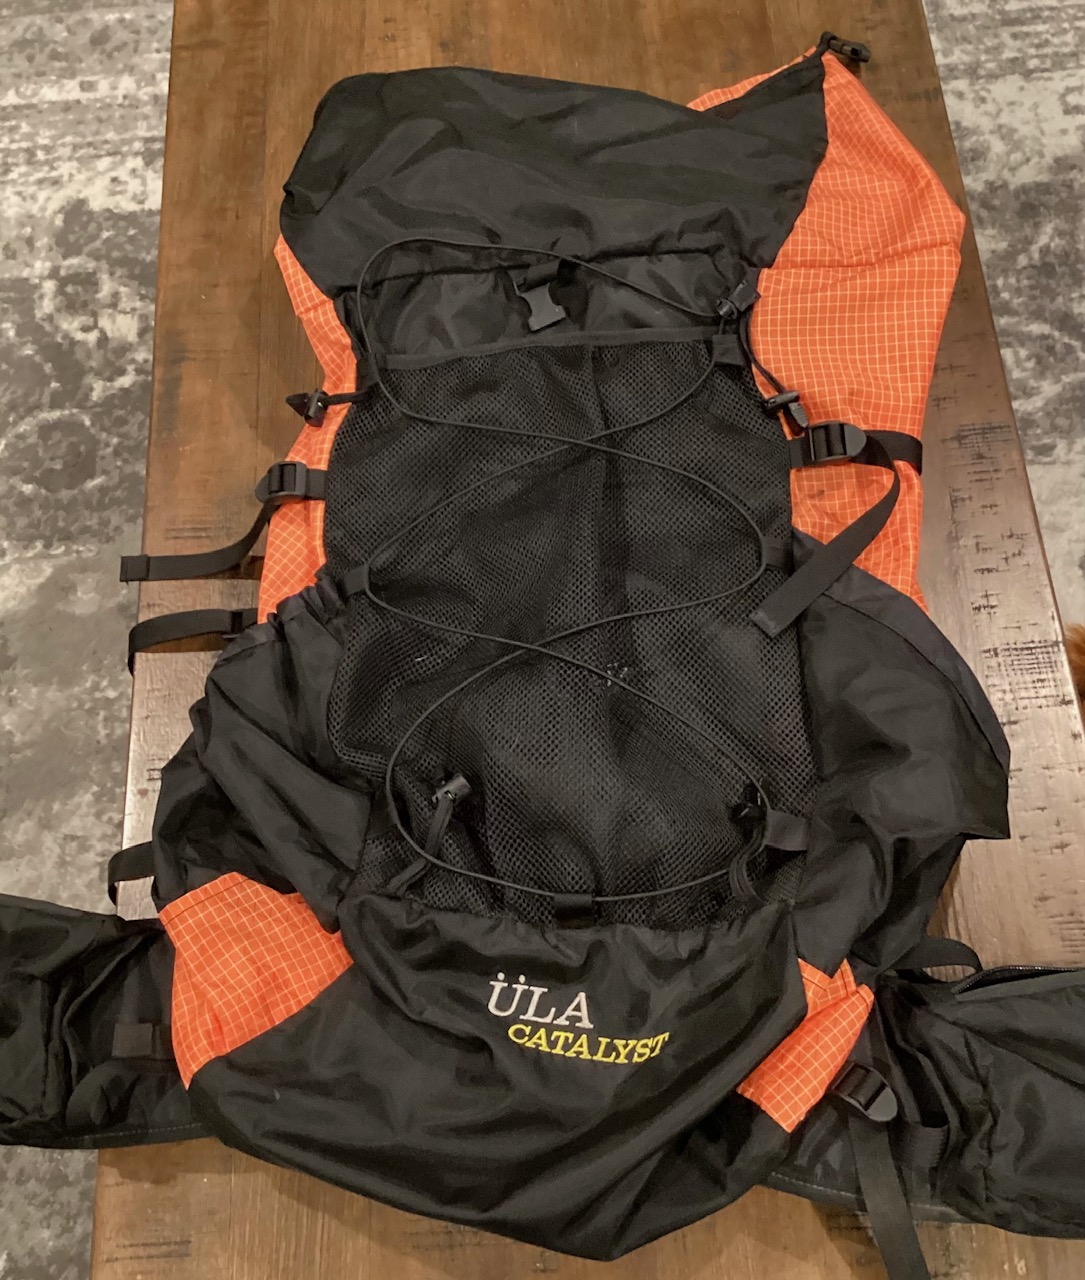 ULA Catalyst Backpack - Backpacking Light